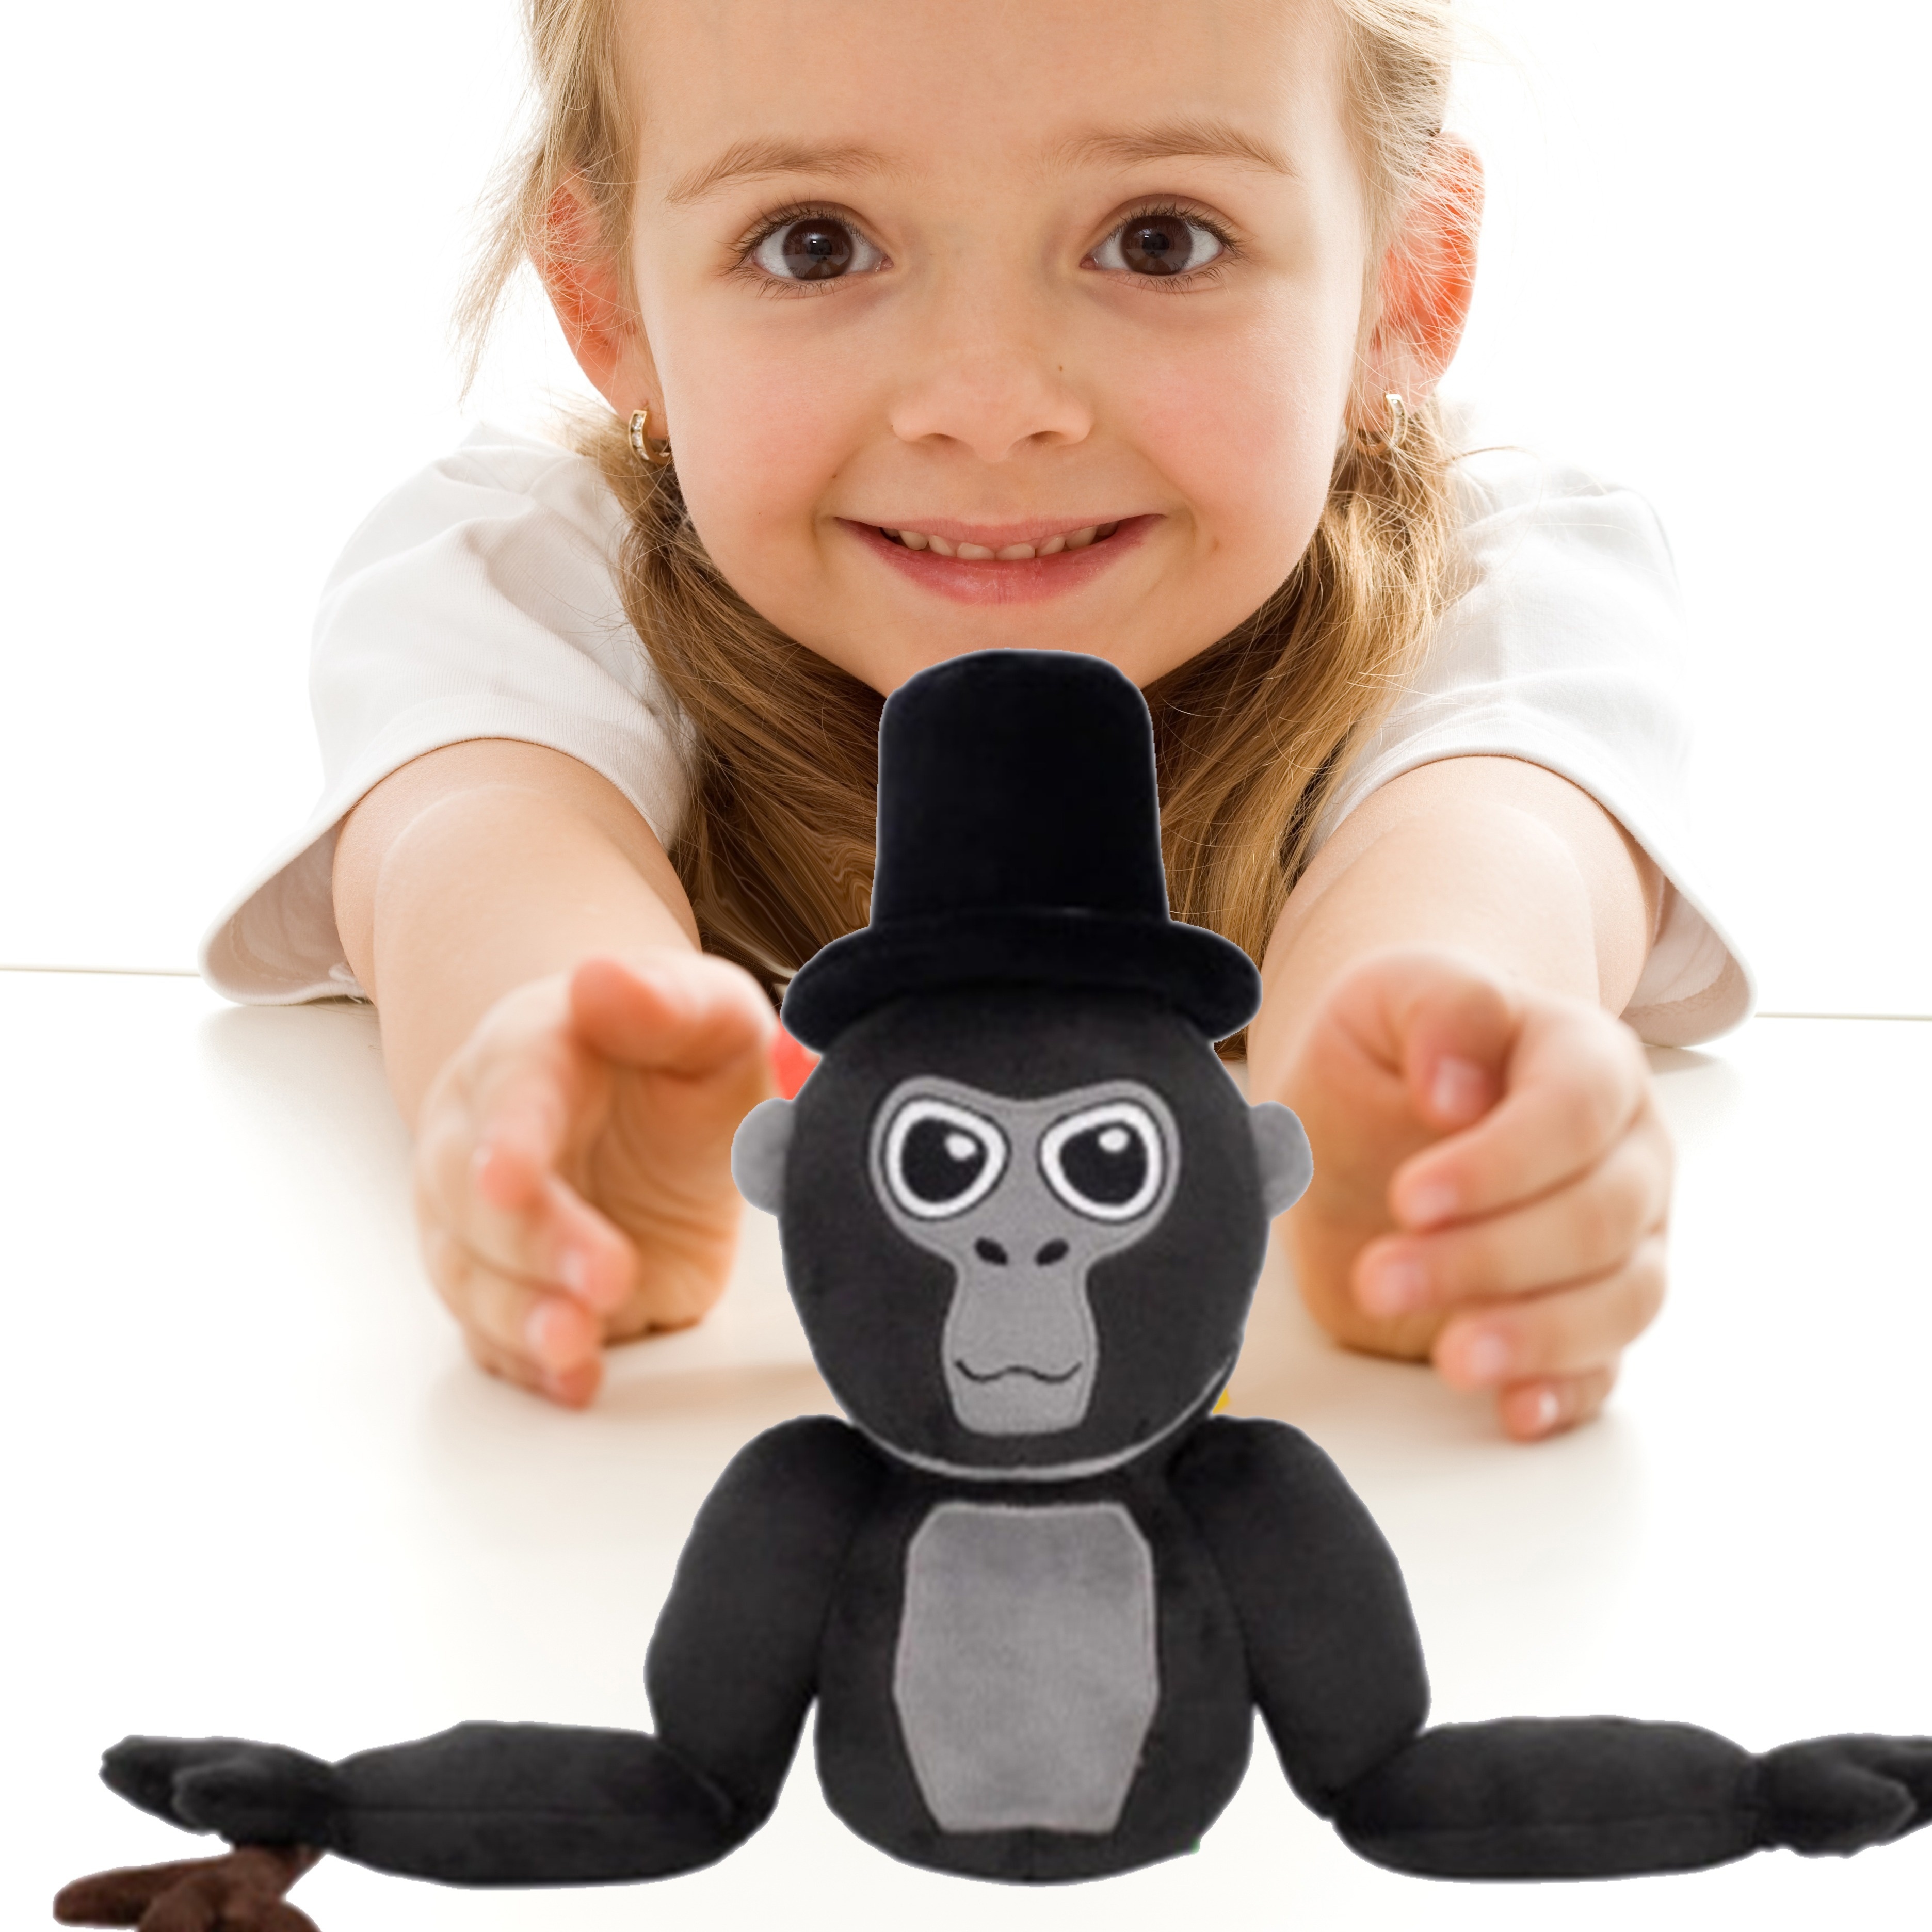 

Gorilla Plush Toy Stuffed Animal Gorilla Plushie Doll Toys Gift For Kids Children 11.8inch